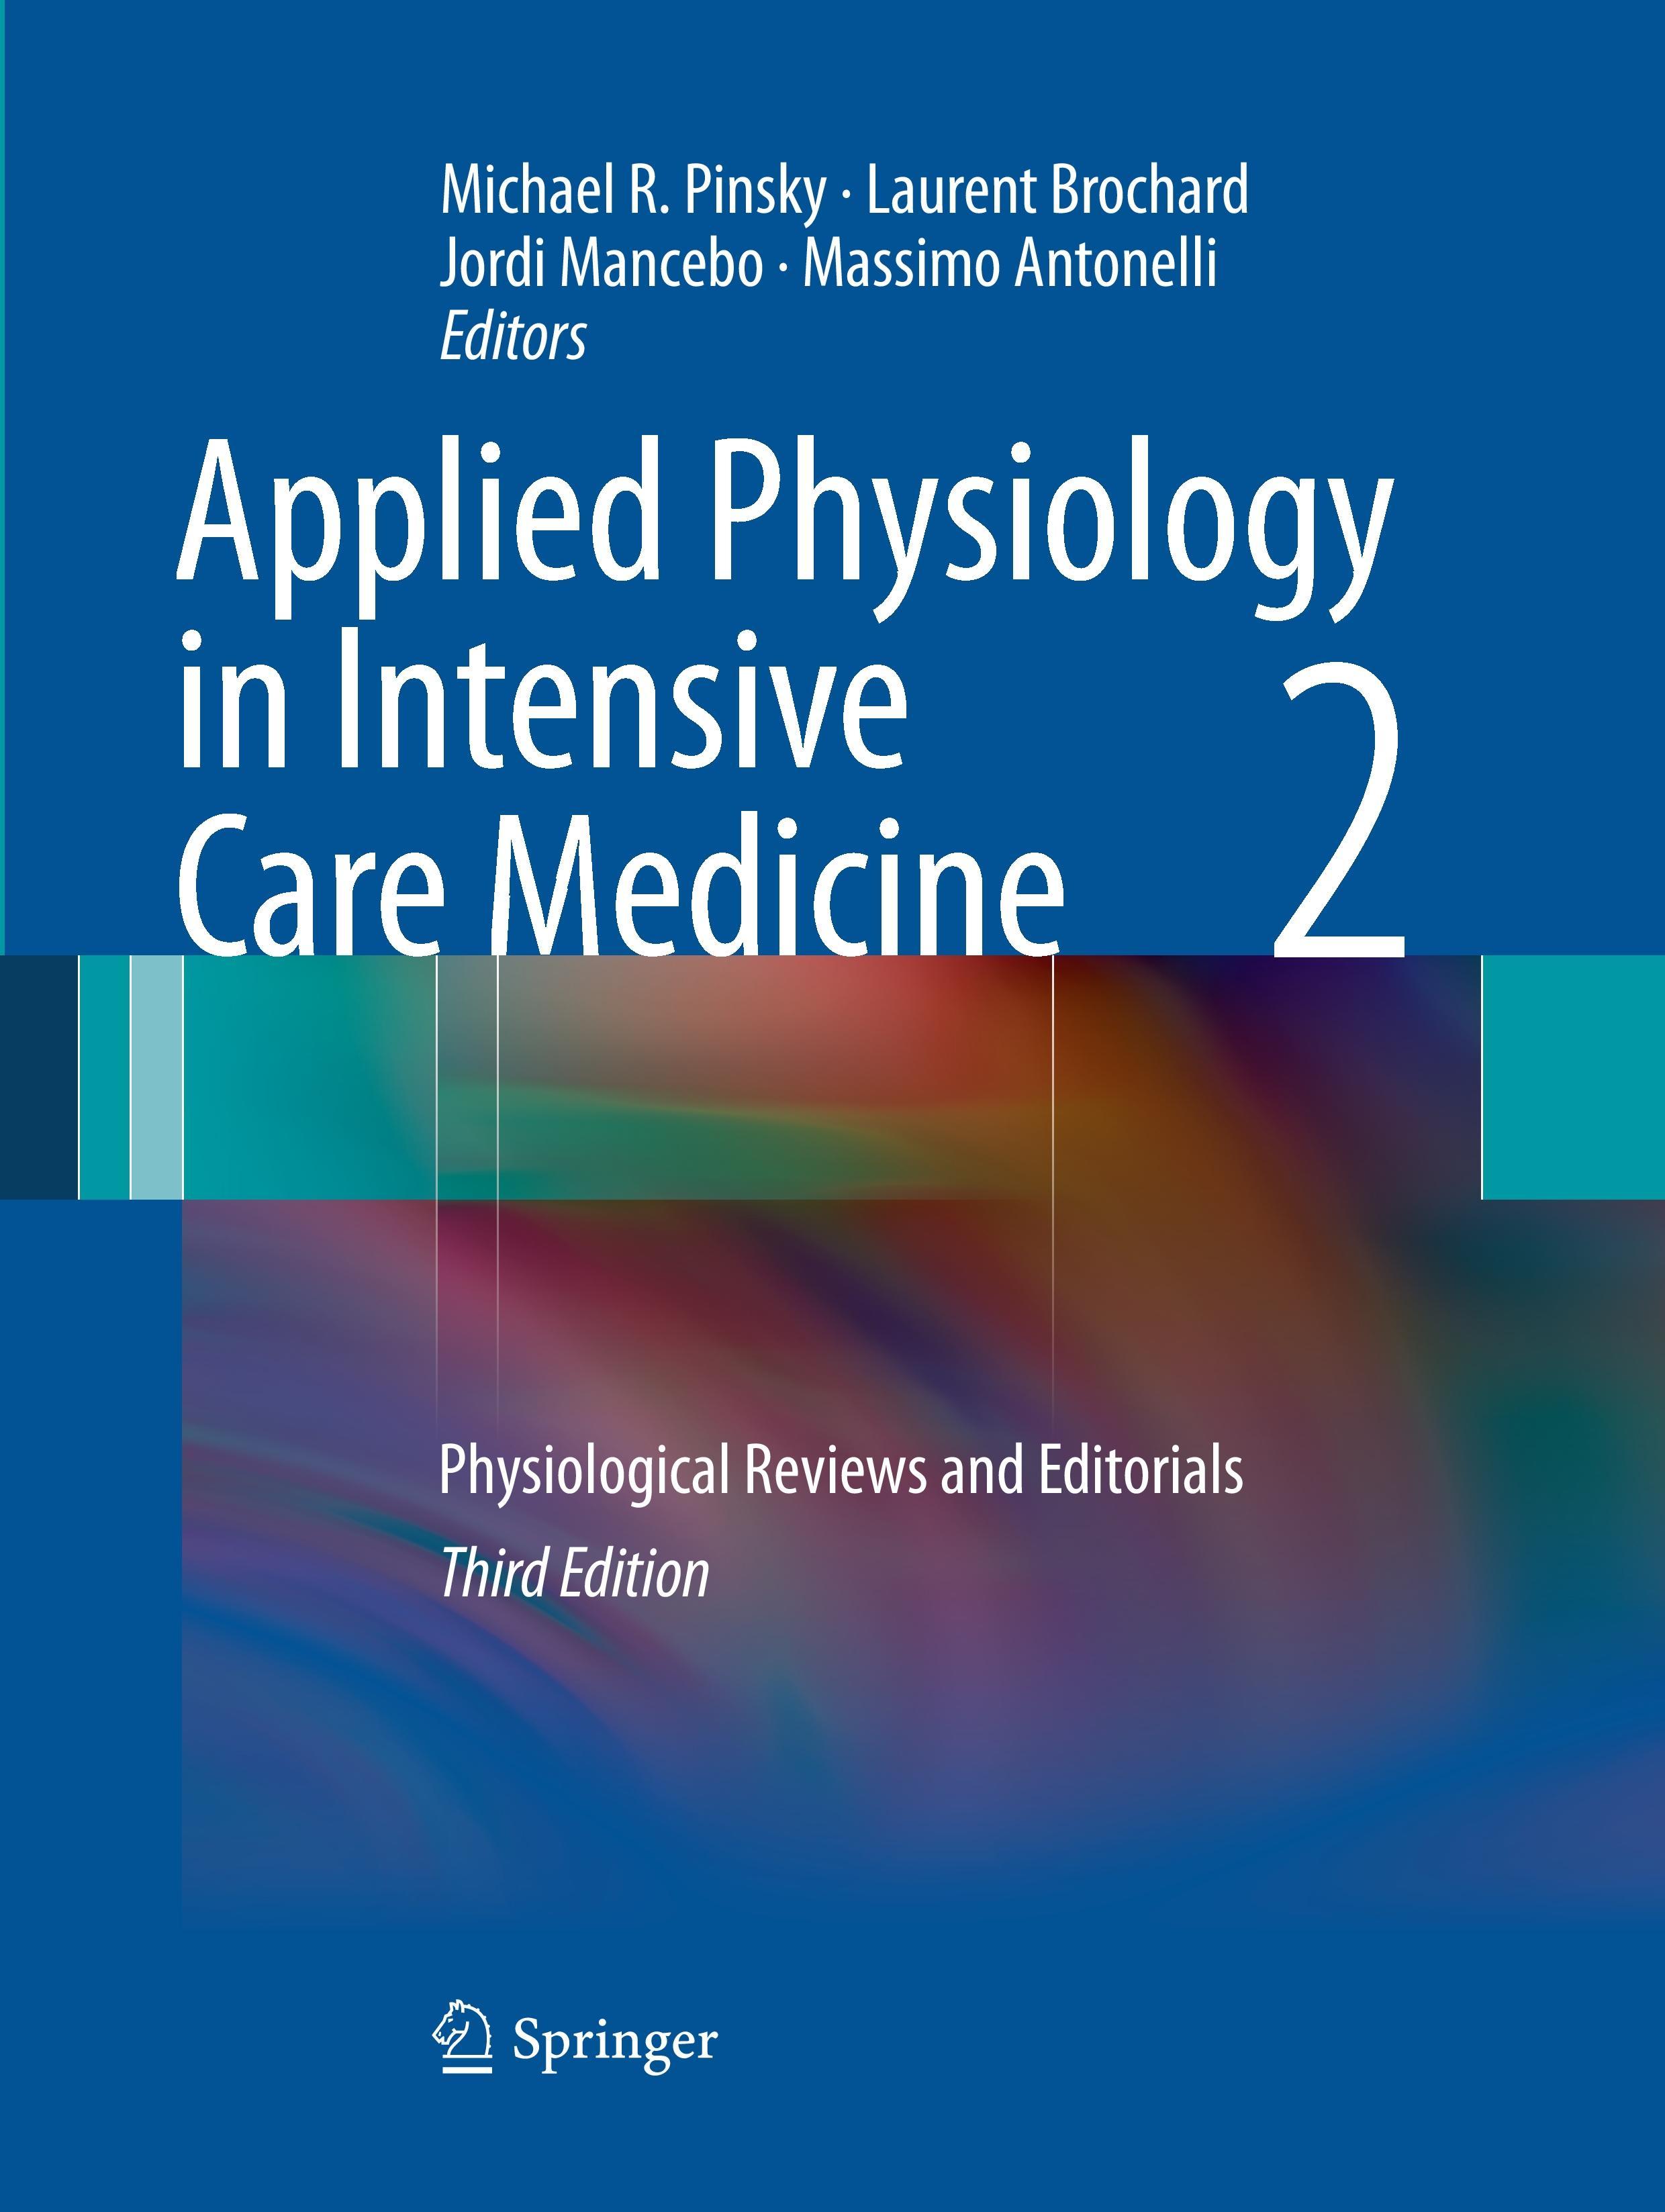 Applied Physiology in Intensive Care Medicine 2 - Pinsky, Michael R.|Brochard, Laurent|Mancebo, Jordi|Antonelli, Massimo